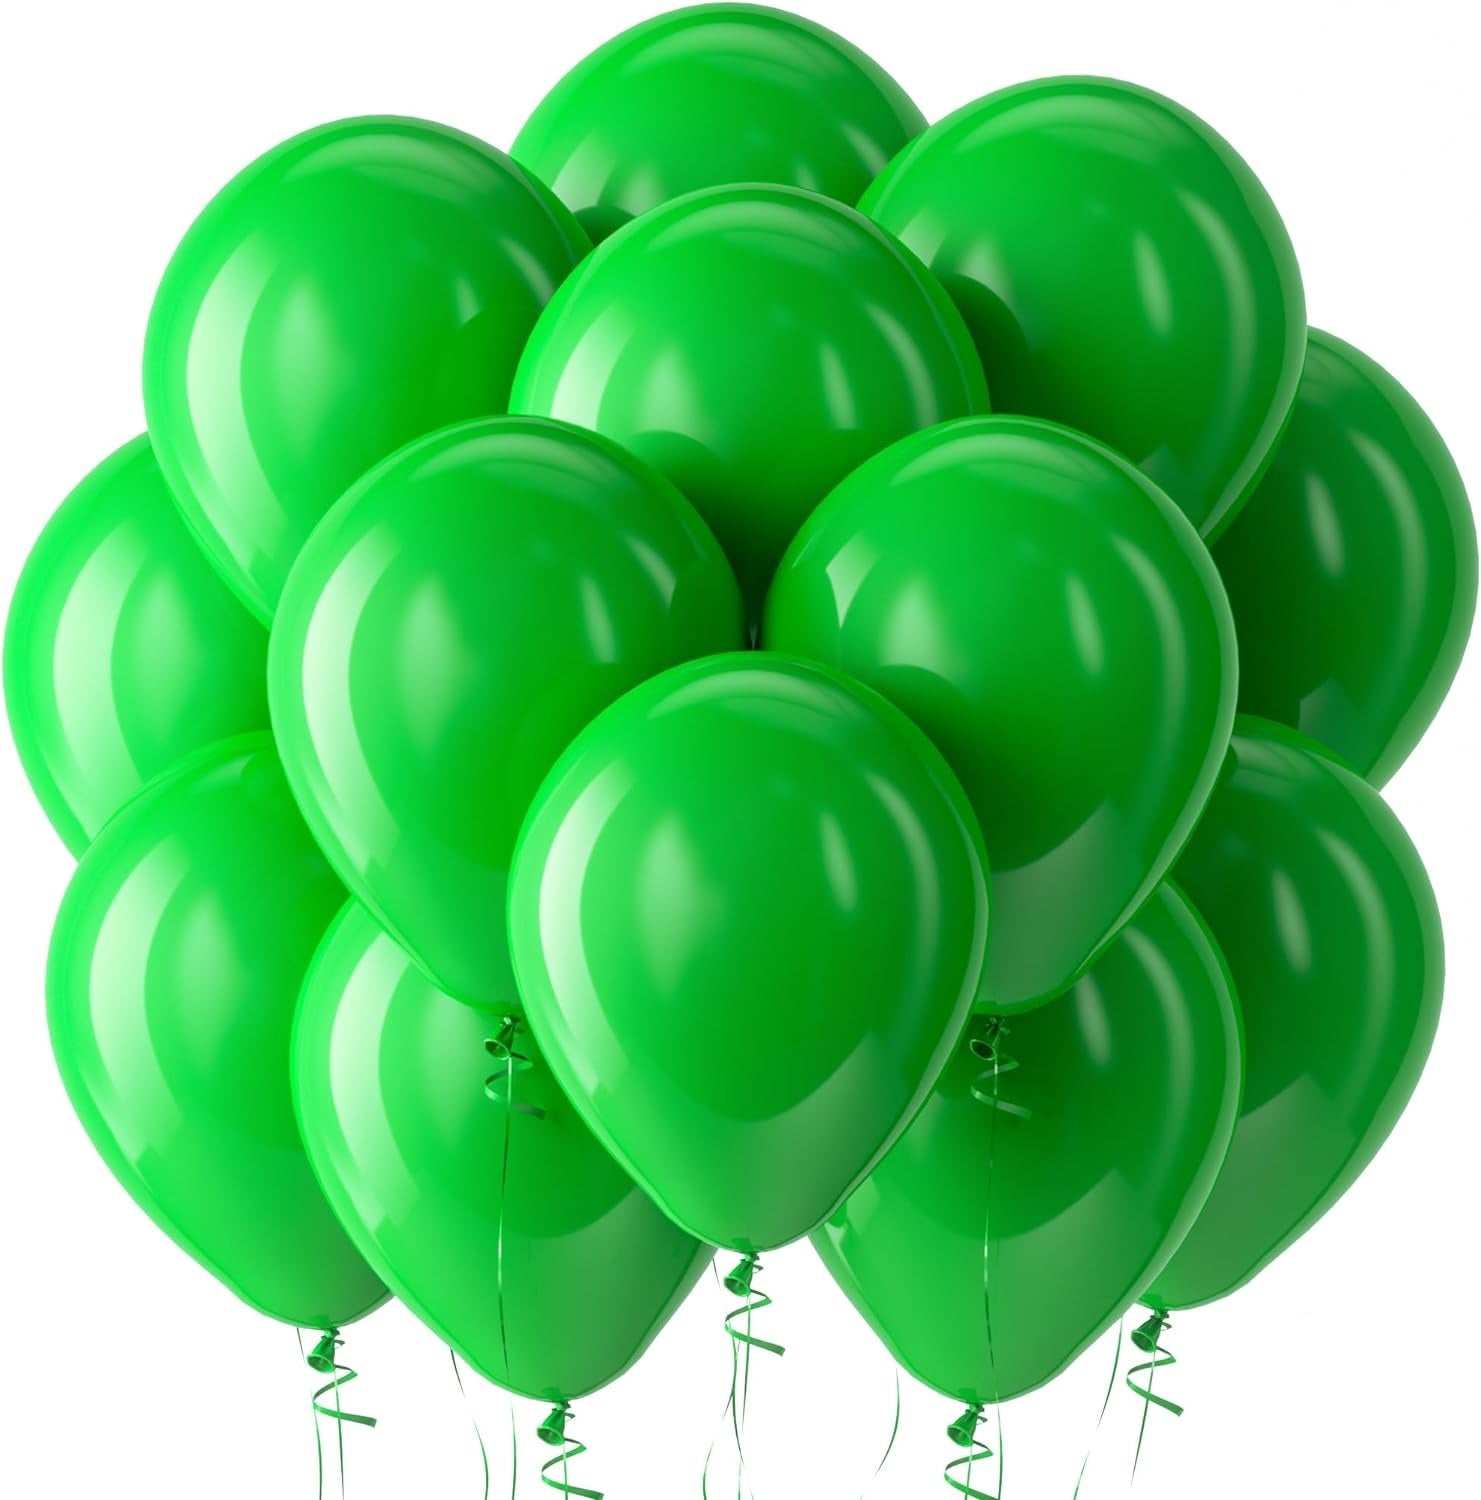 12 Inch Chrome Balloons